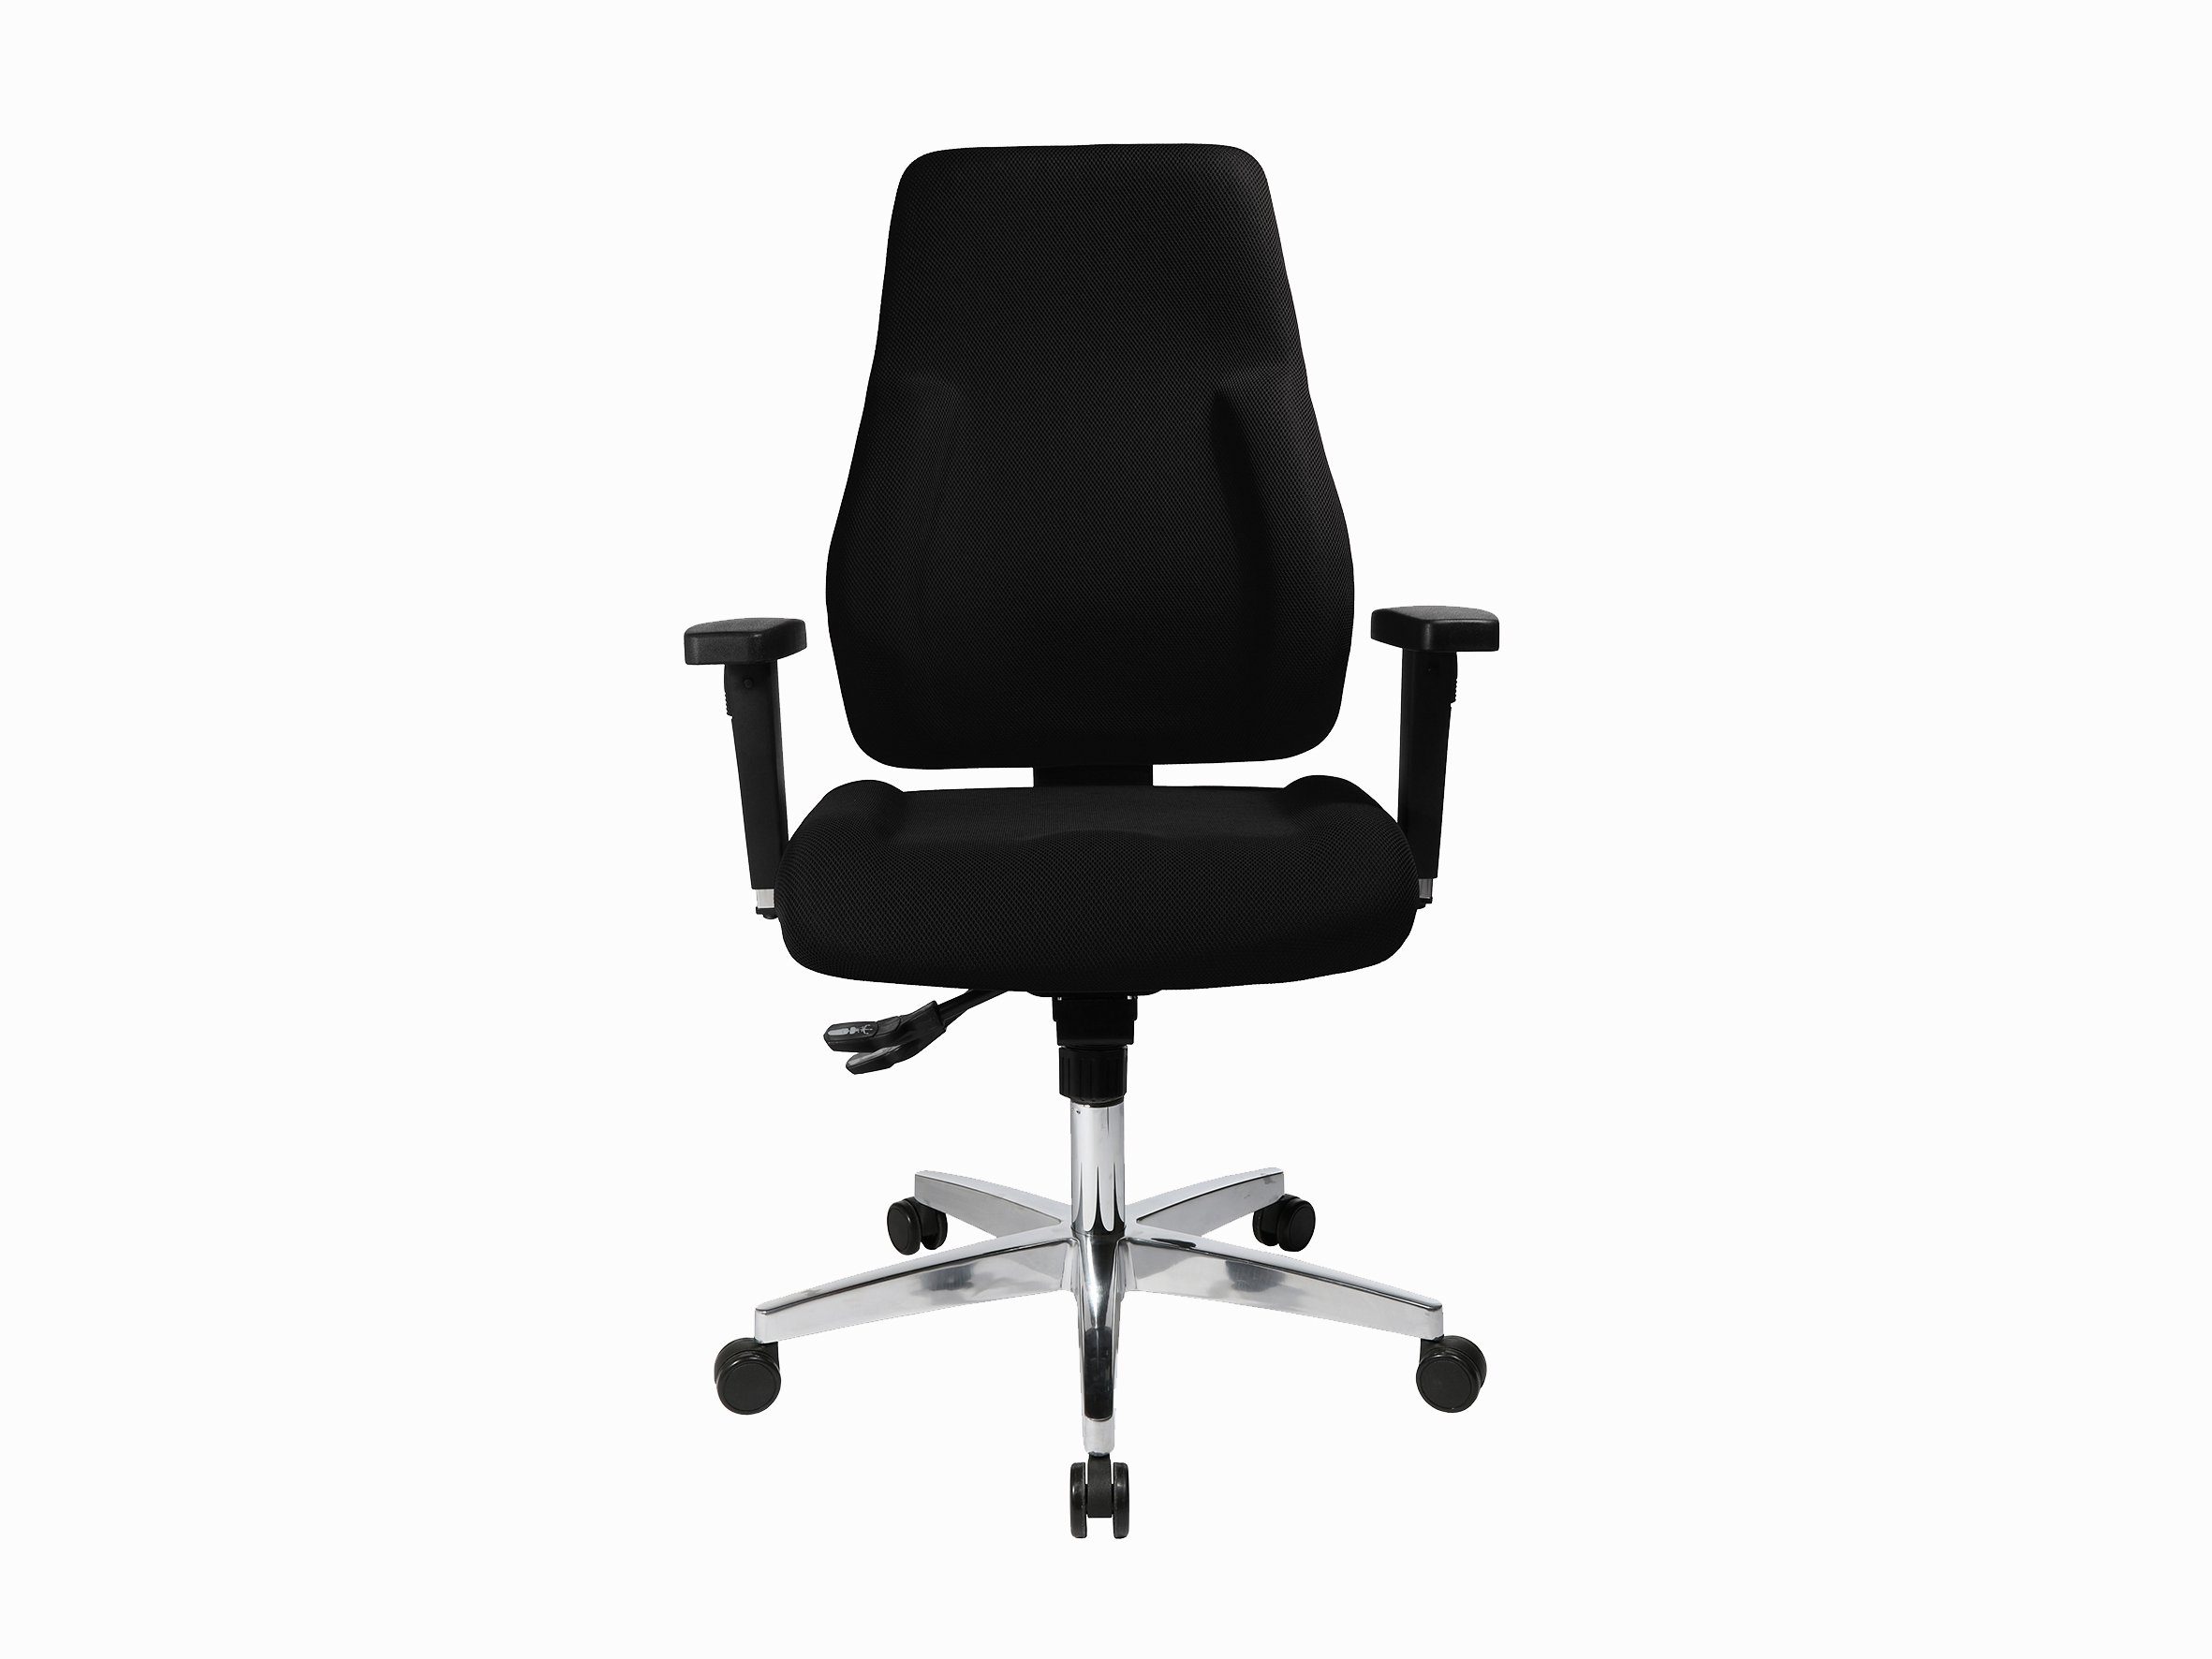 Moebel-Eins Stuhl P91 Drehstuhl, Material Stoff/Aluminium, schwarz, P91 Drehstuhl, Material Stoff/Aluminium, schwarz